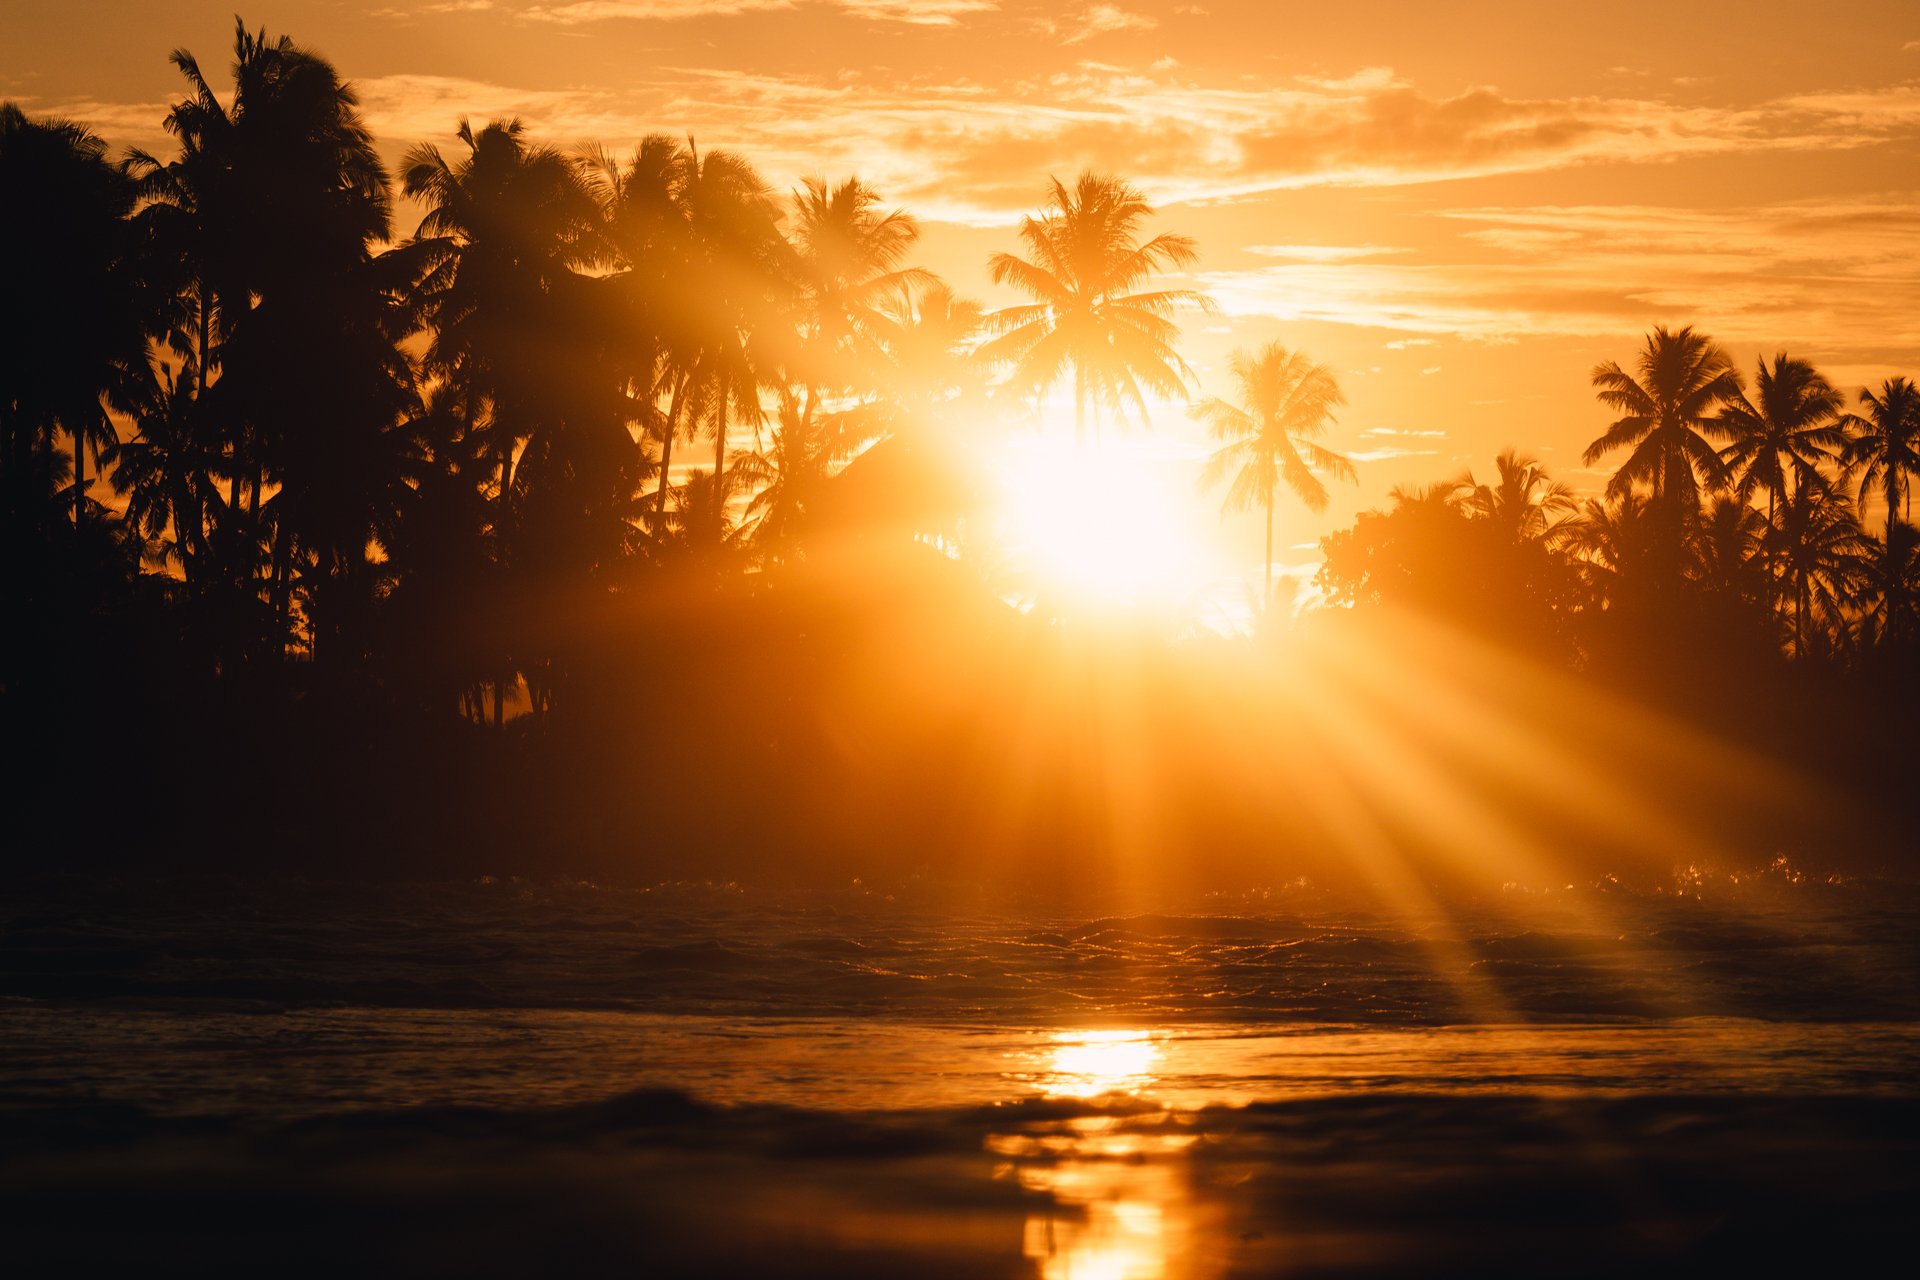 Sunrise palmtree ocean photo art by Matt Power